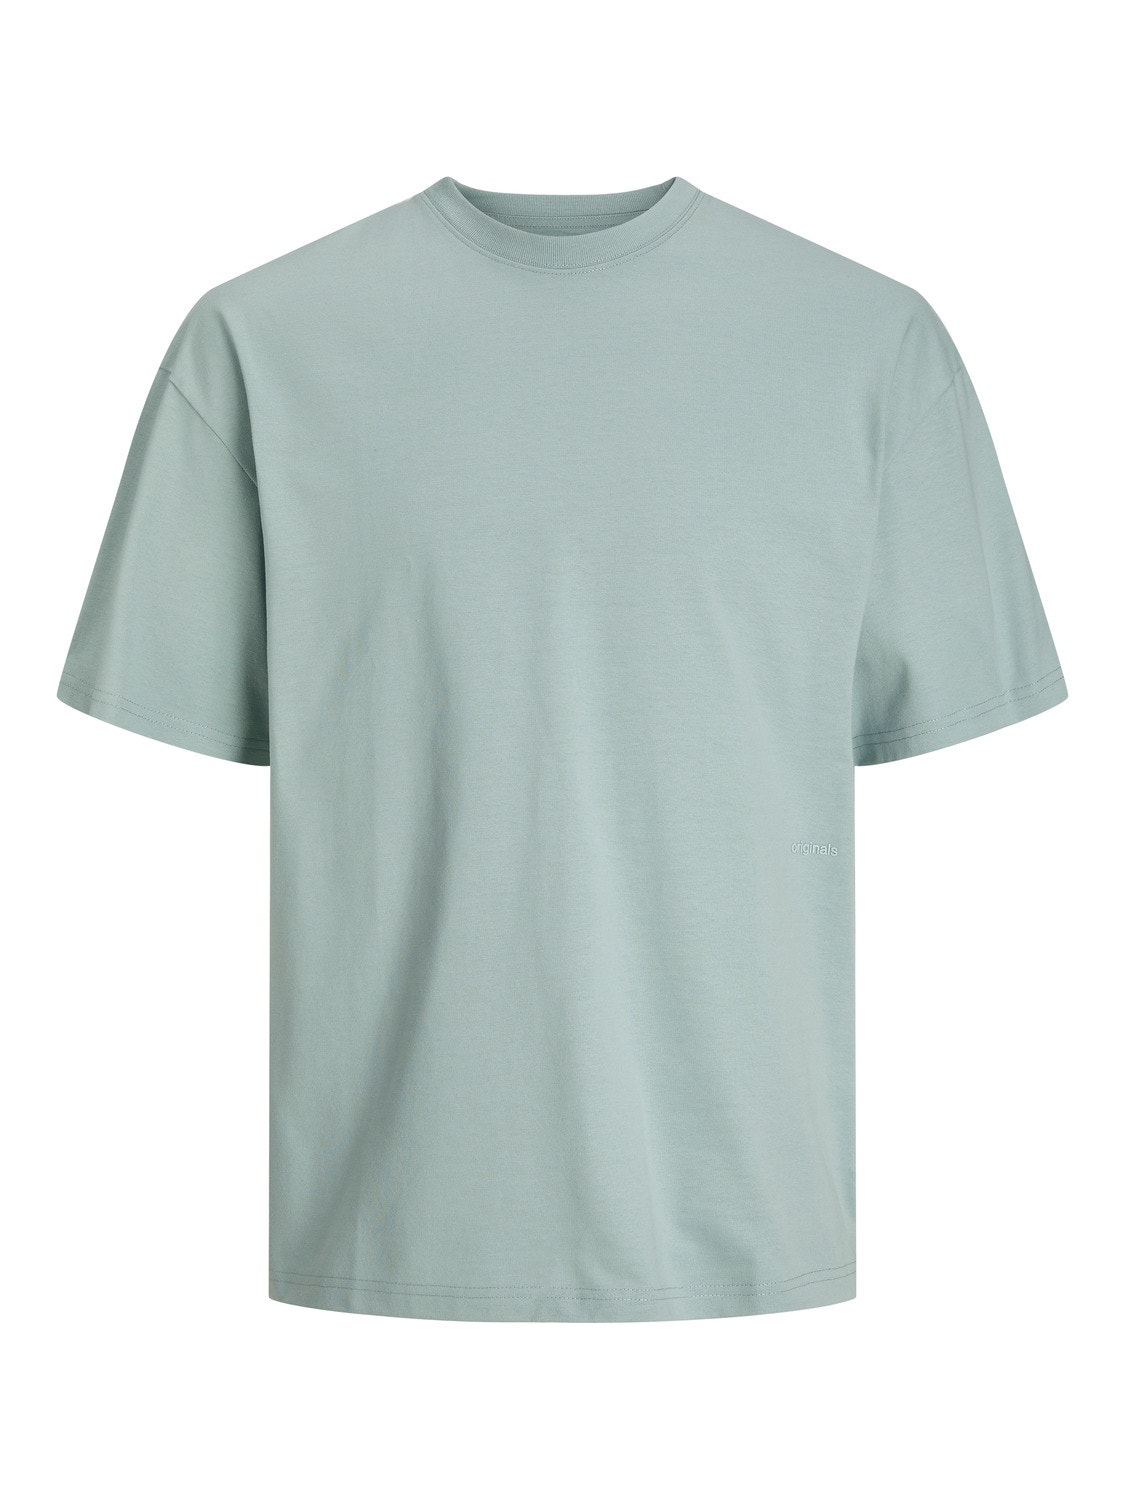 Jack & Jones T-shirt Liso Decote Redondo -Gray Mist - 12227086